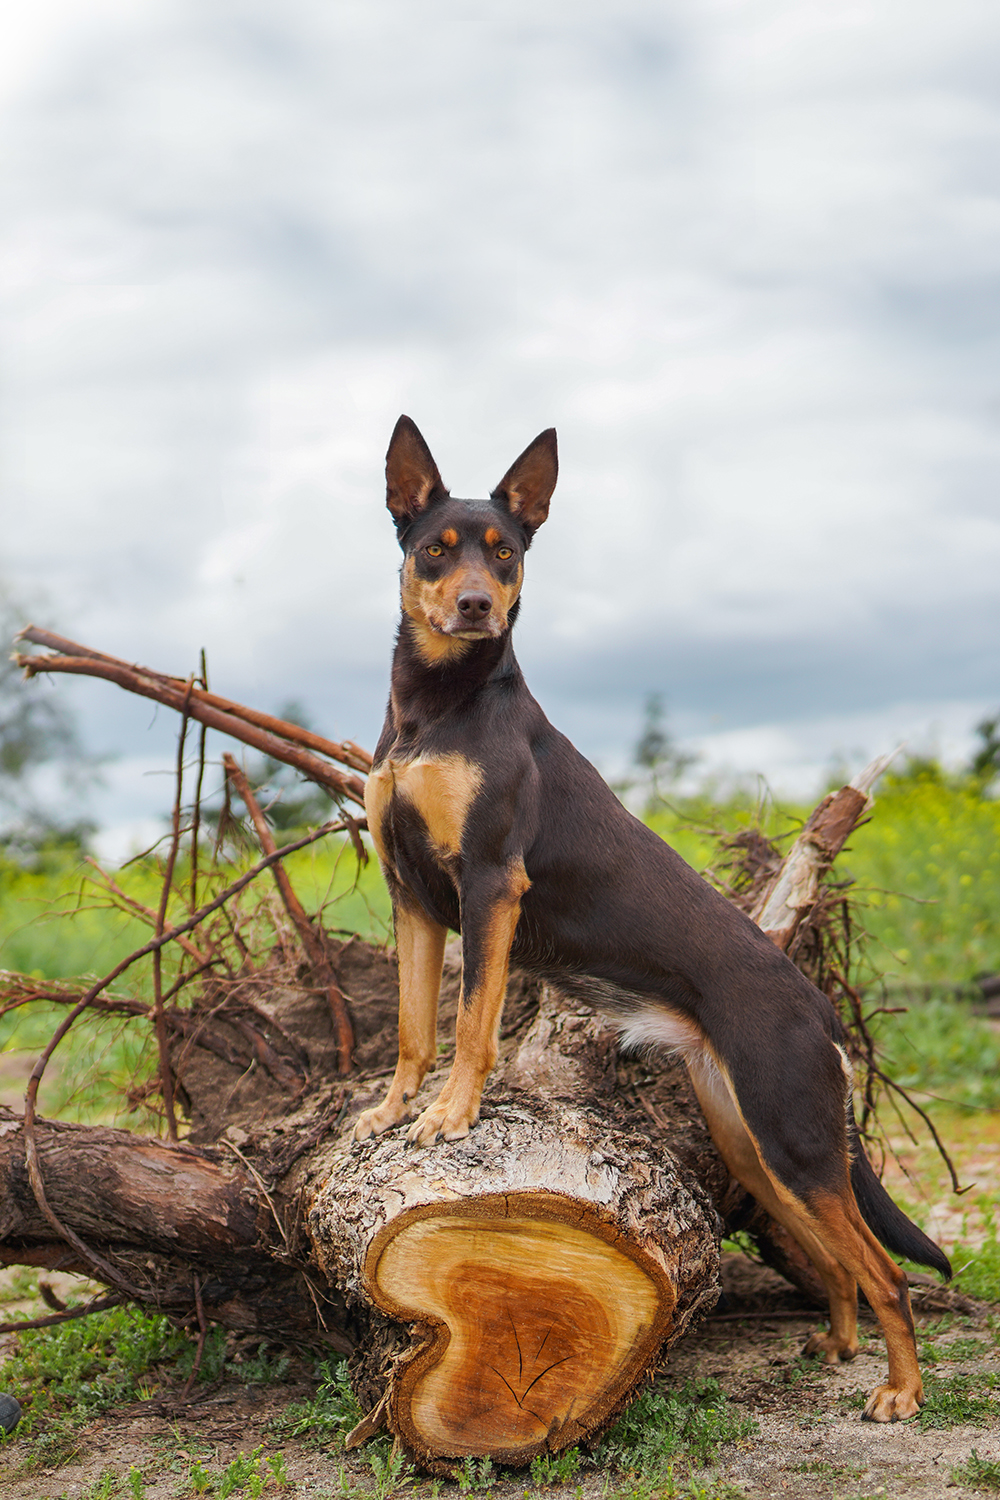 Dog posing on a fallen tree stump